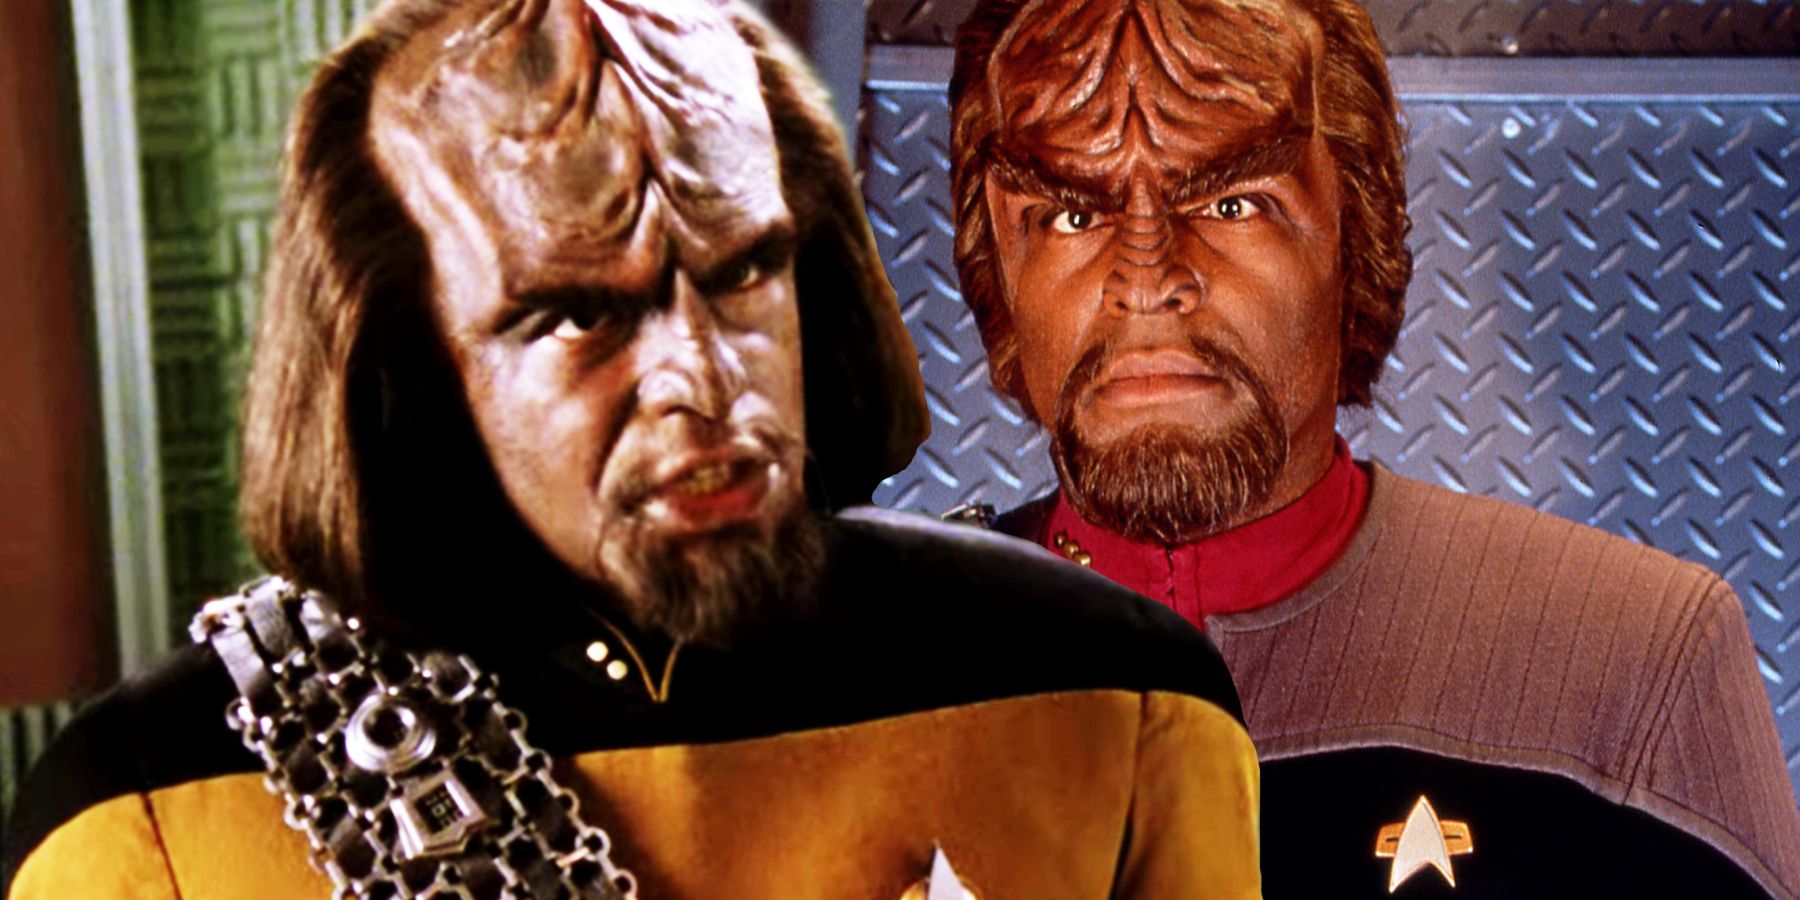 Michael Dorn as Worf in Star Trek: TNG and in Star Trek: DS9